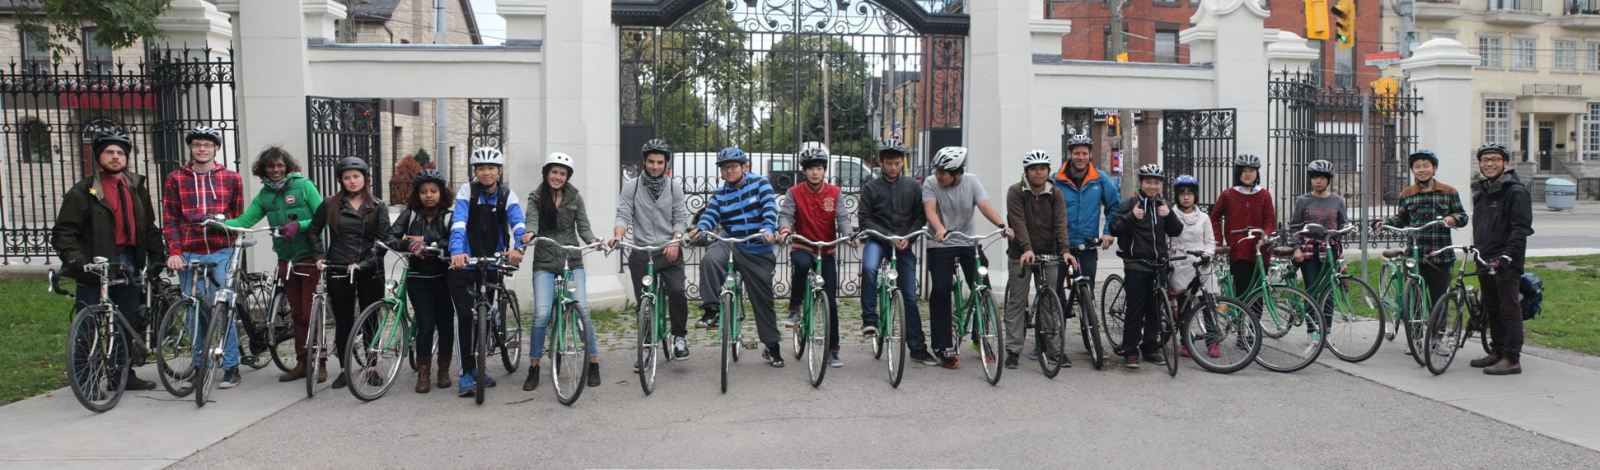 International Students & English Language Learners on bikes